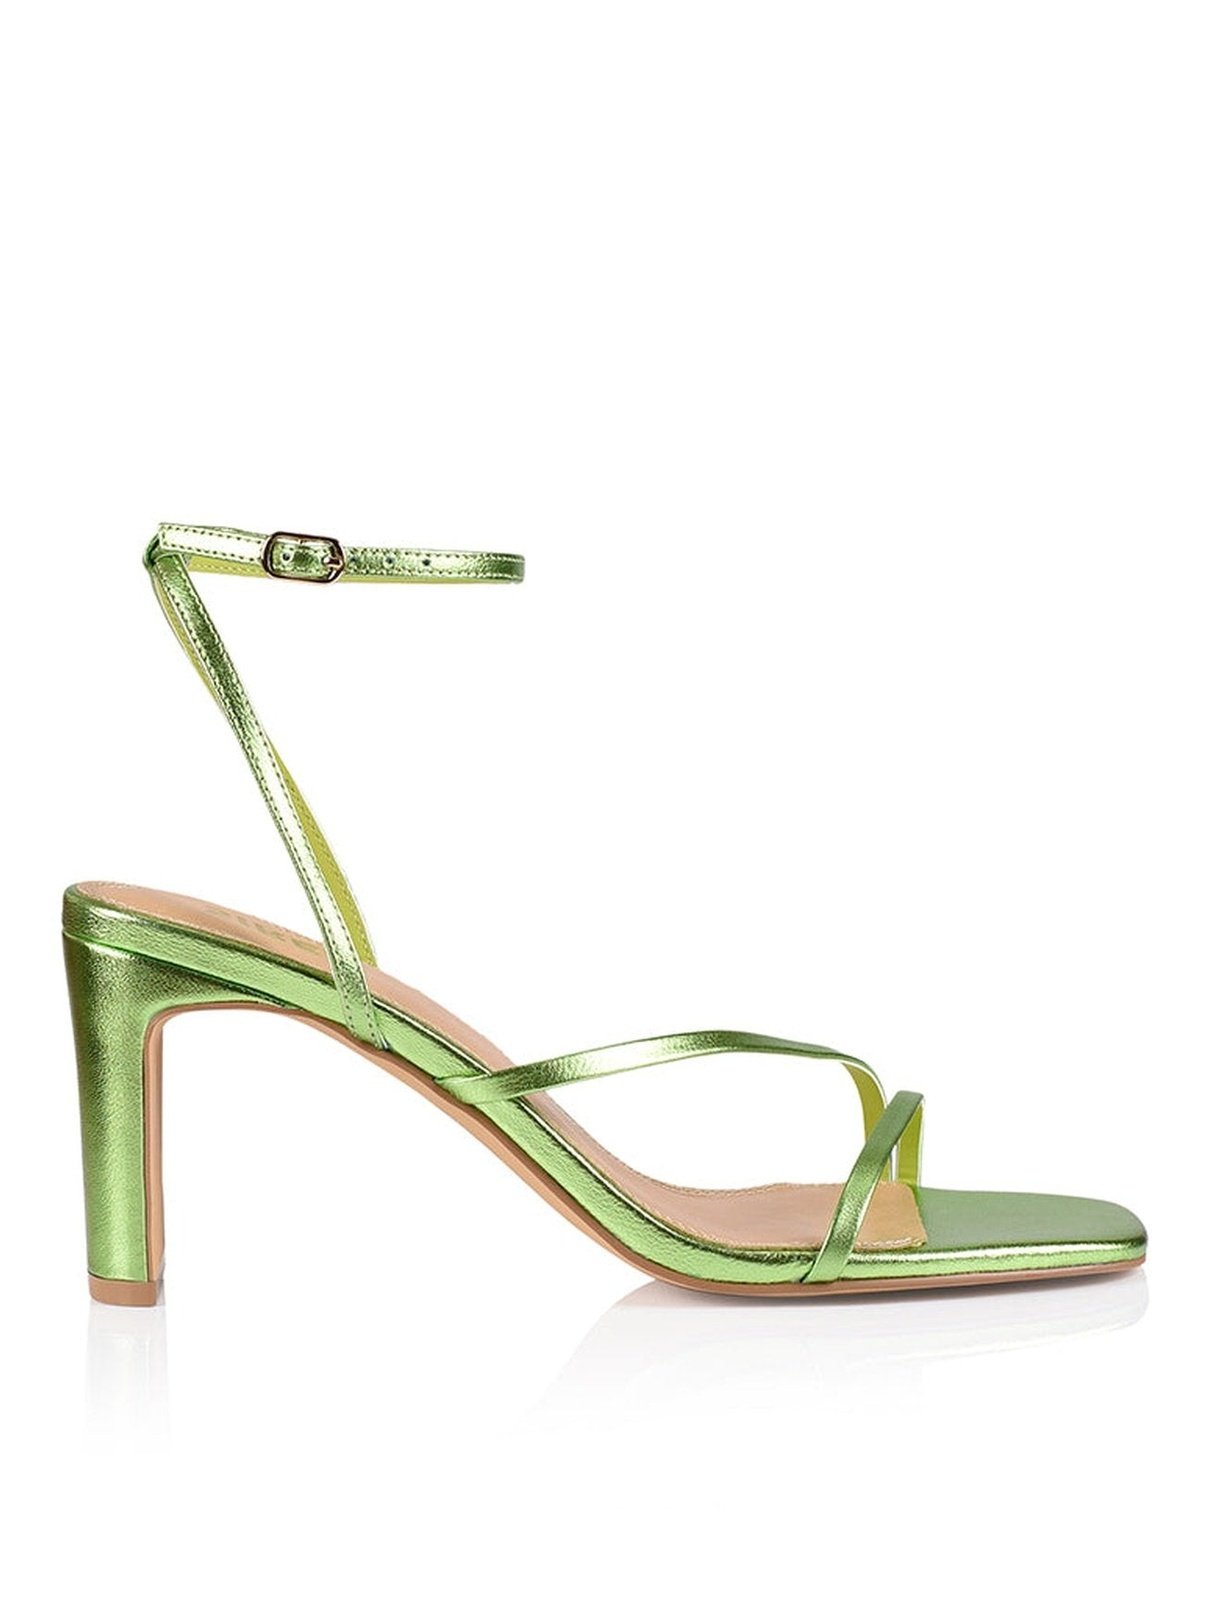 Kandice Block Heel Sandals - Lime Green Metallic Leather